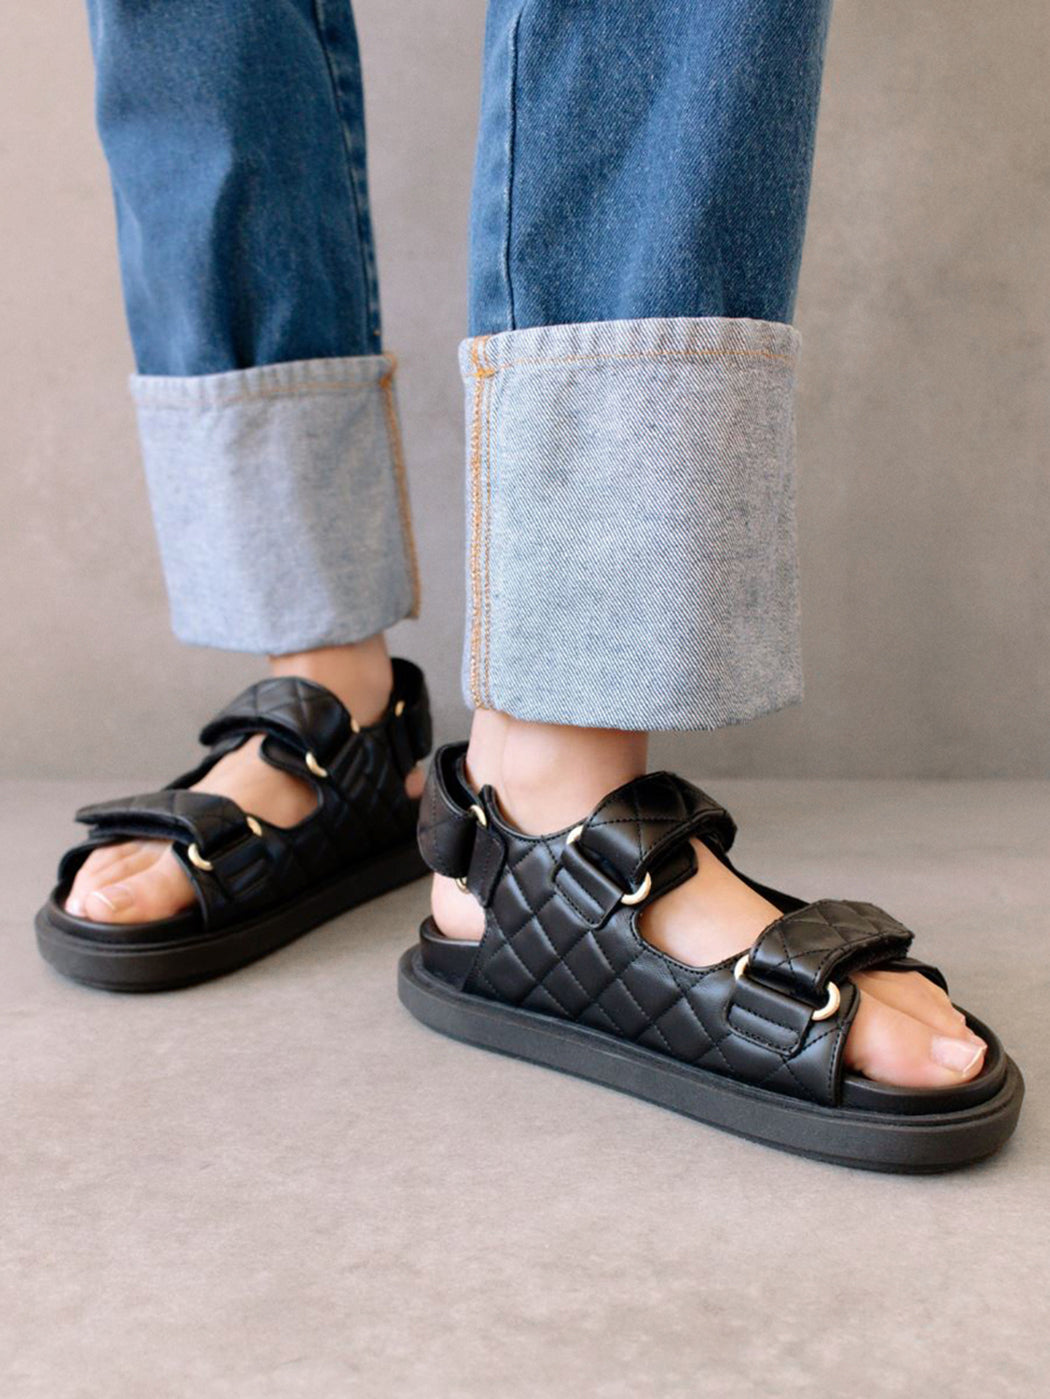 Women's Outdoor Black Flat Sandals Hook-and-loop Fastener Strap Ankle Strap  Flat Sandals